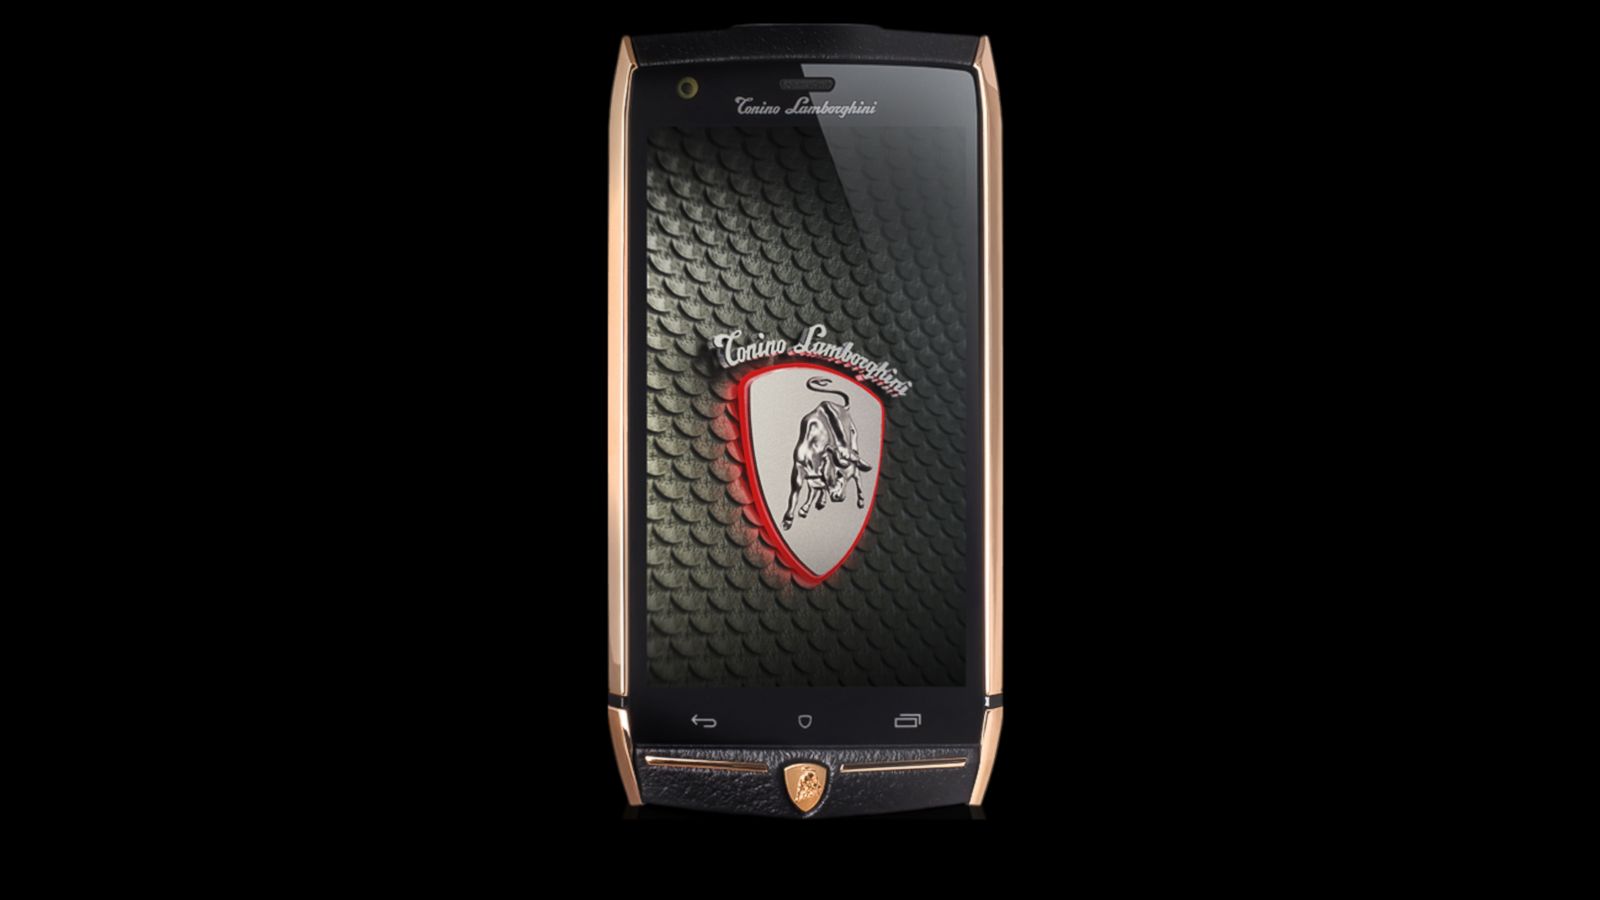 What Makes This Lamborghini Phone So Special - ABC News